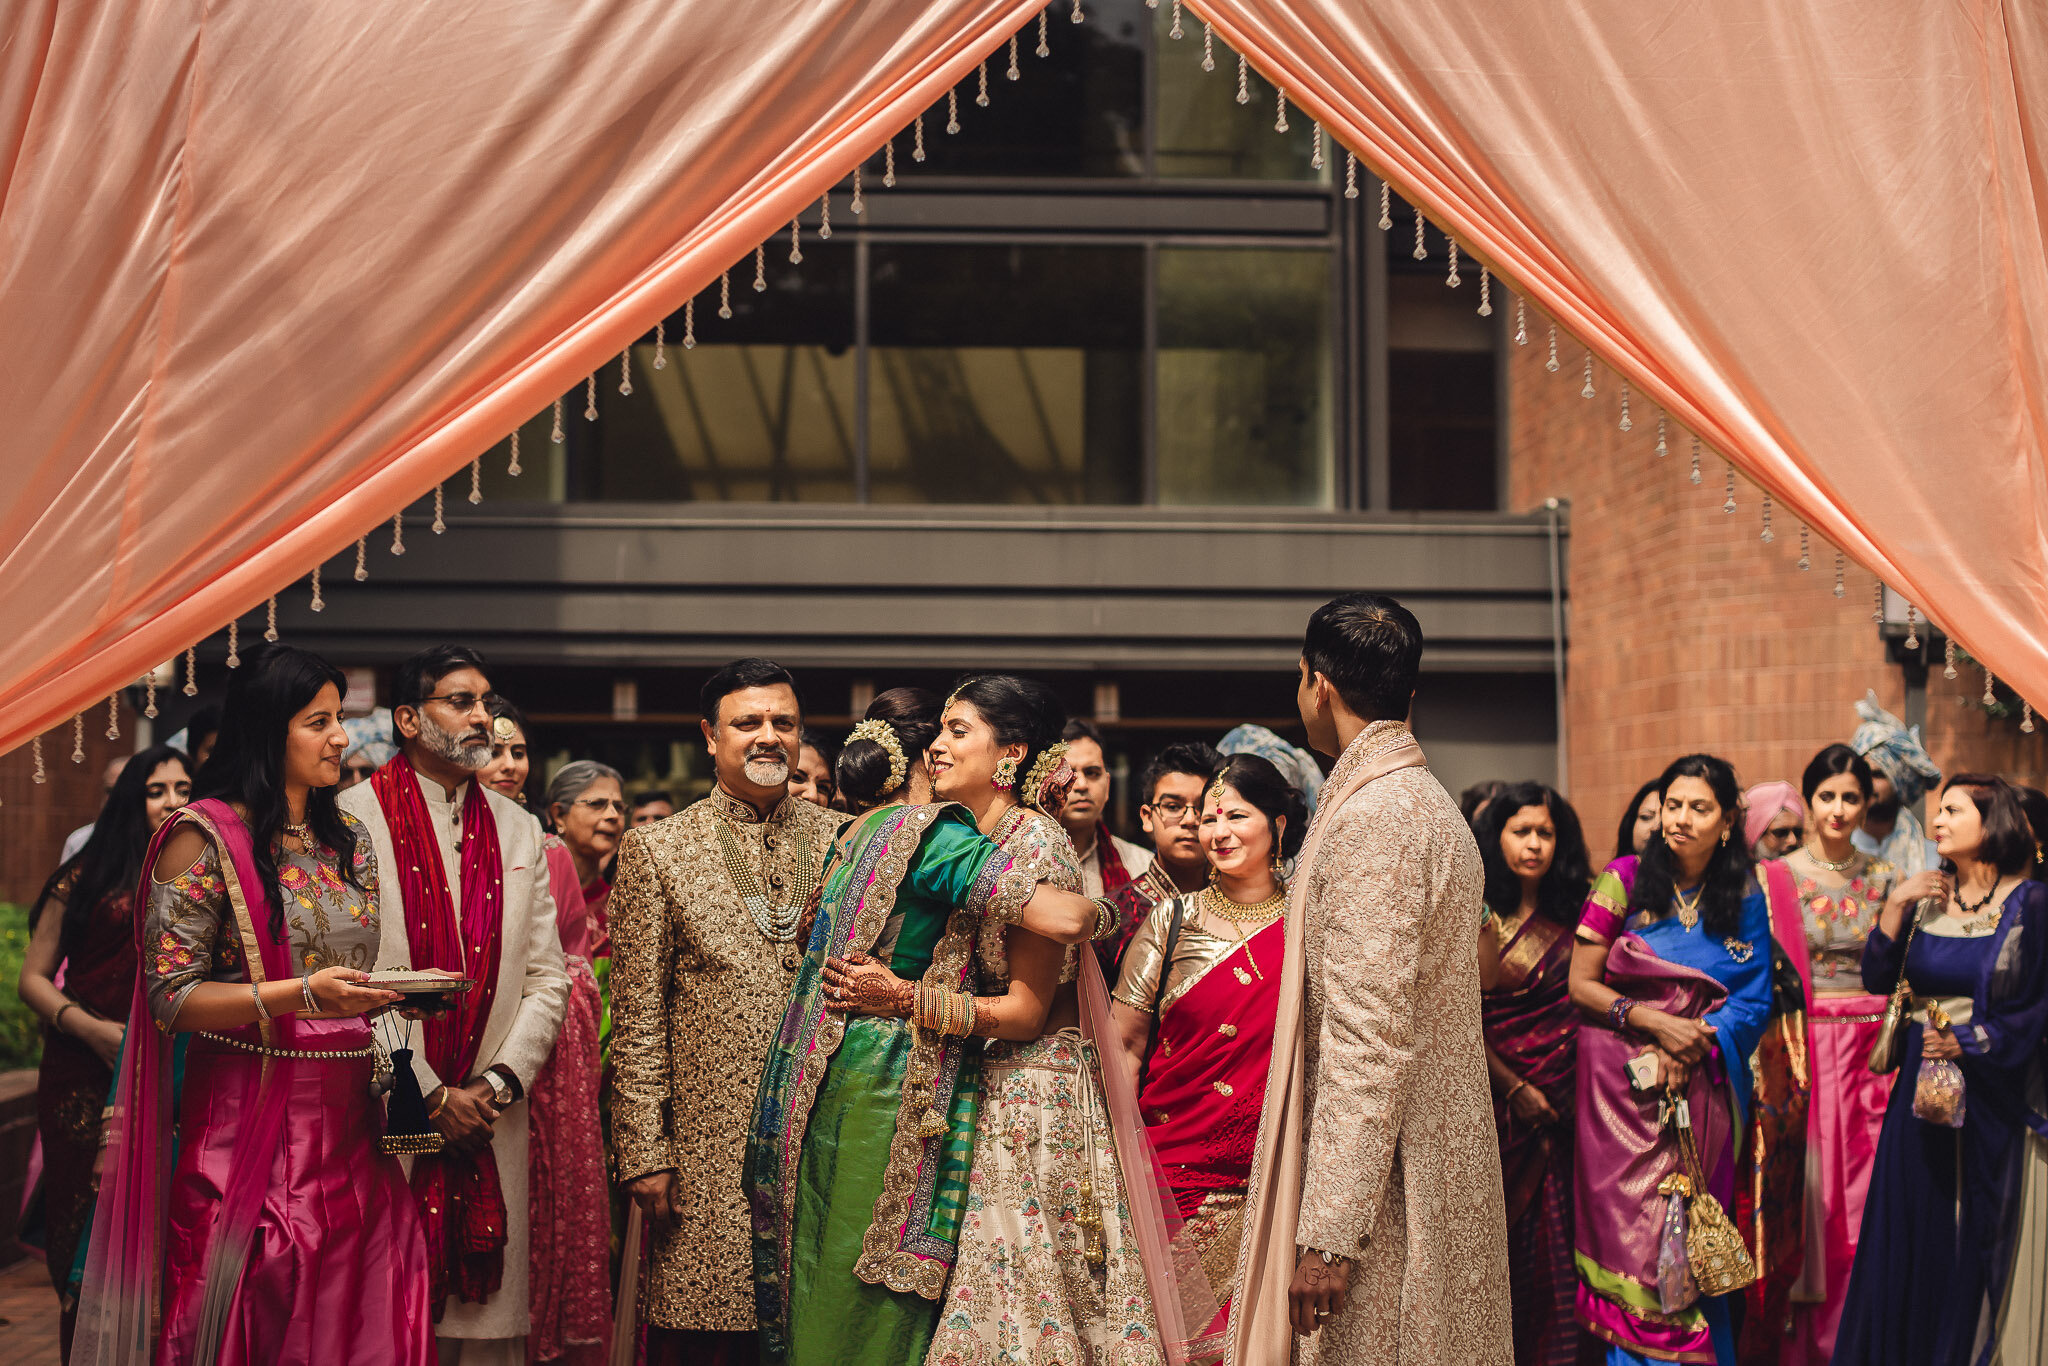 Princeton Hyatt Regency Indian Wedding NY and NJ Premium Indian Wedding Photographer Manish and Sung Photography, Manish Mavani and Sung Kwan Ma  NY NJ INDIAN WEDDING PHOTOGRAPHER